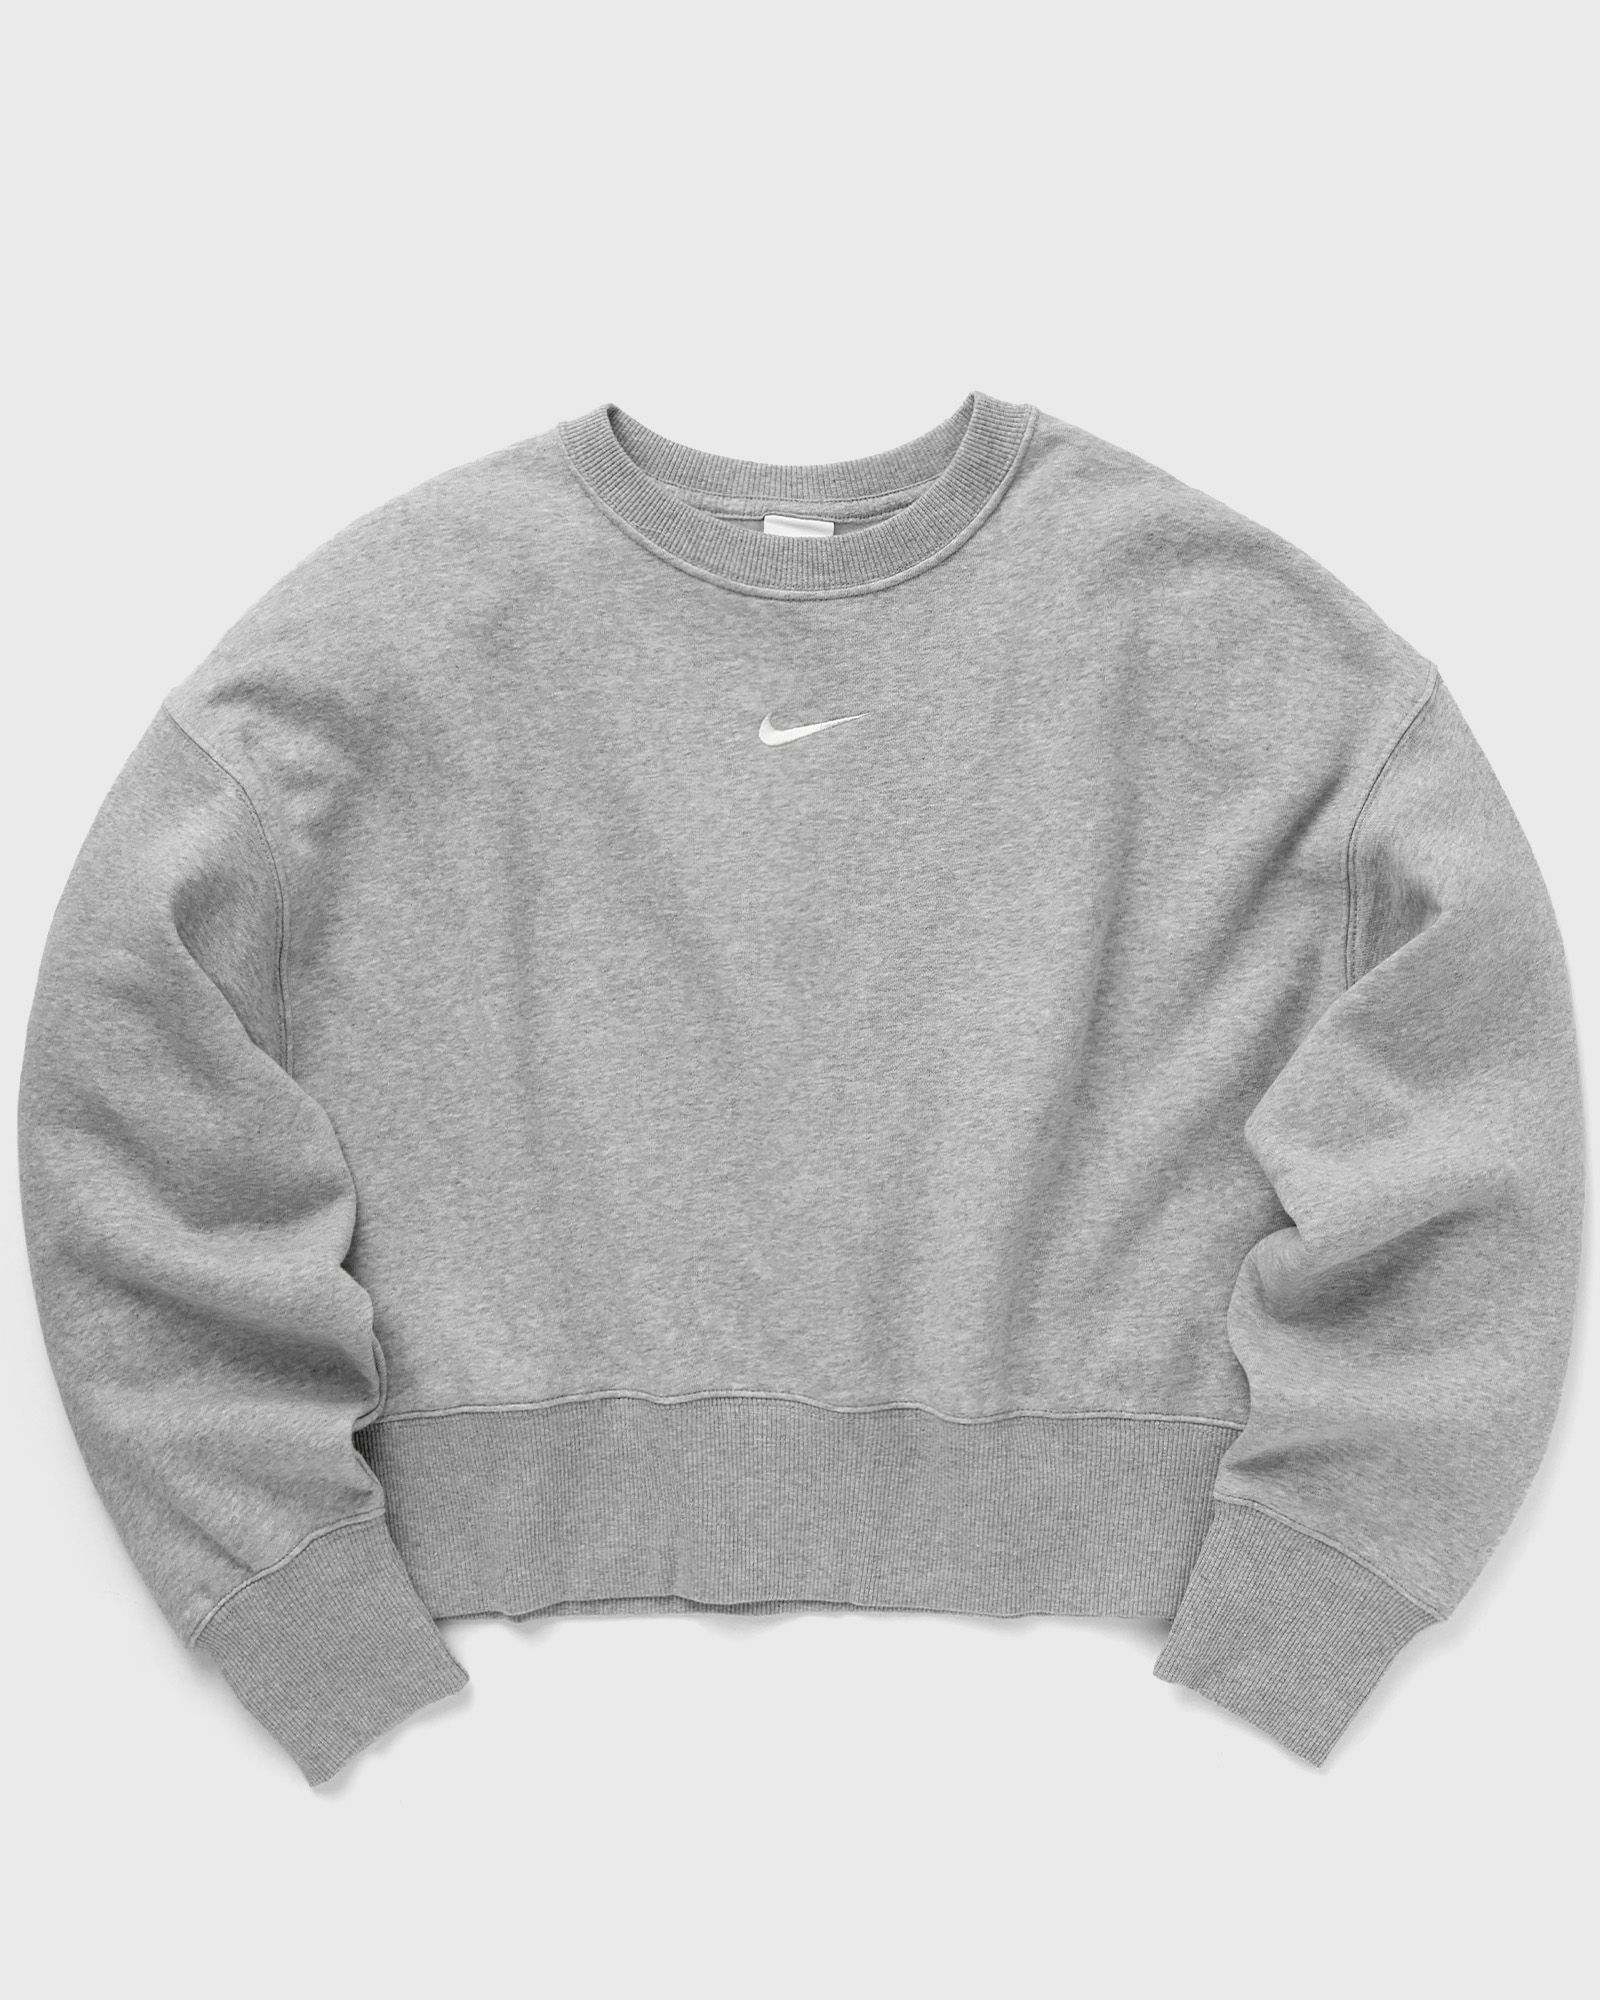 Nike - wmns phoenix fleece over-oversized crew-neck sweatshirt women sweatshirts grey in größe:l